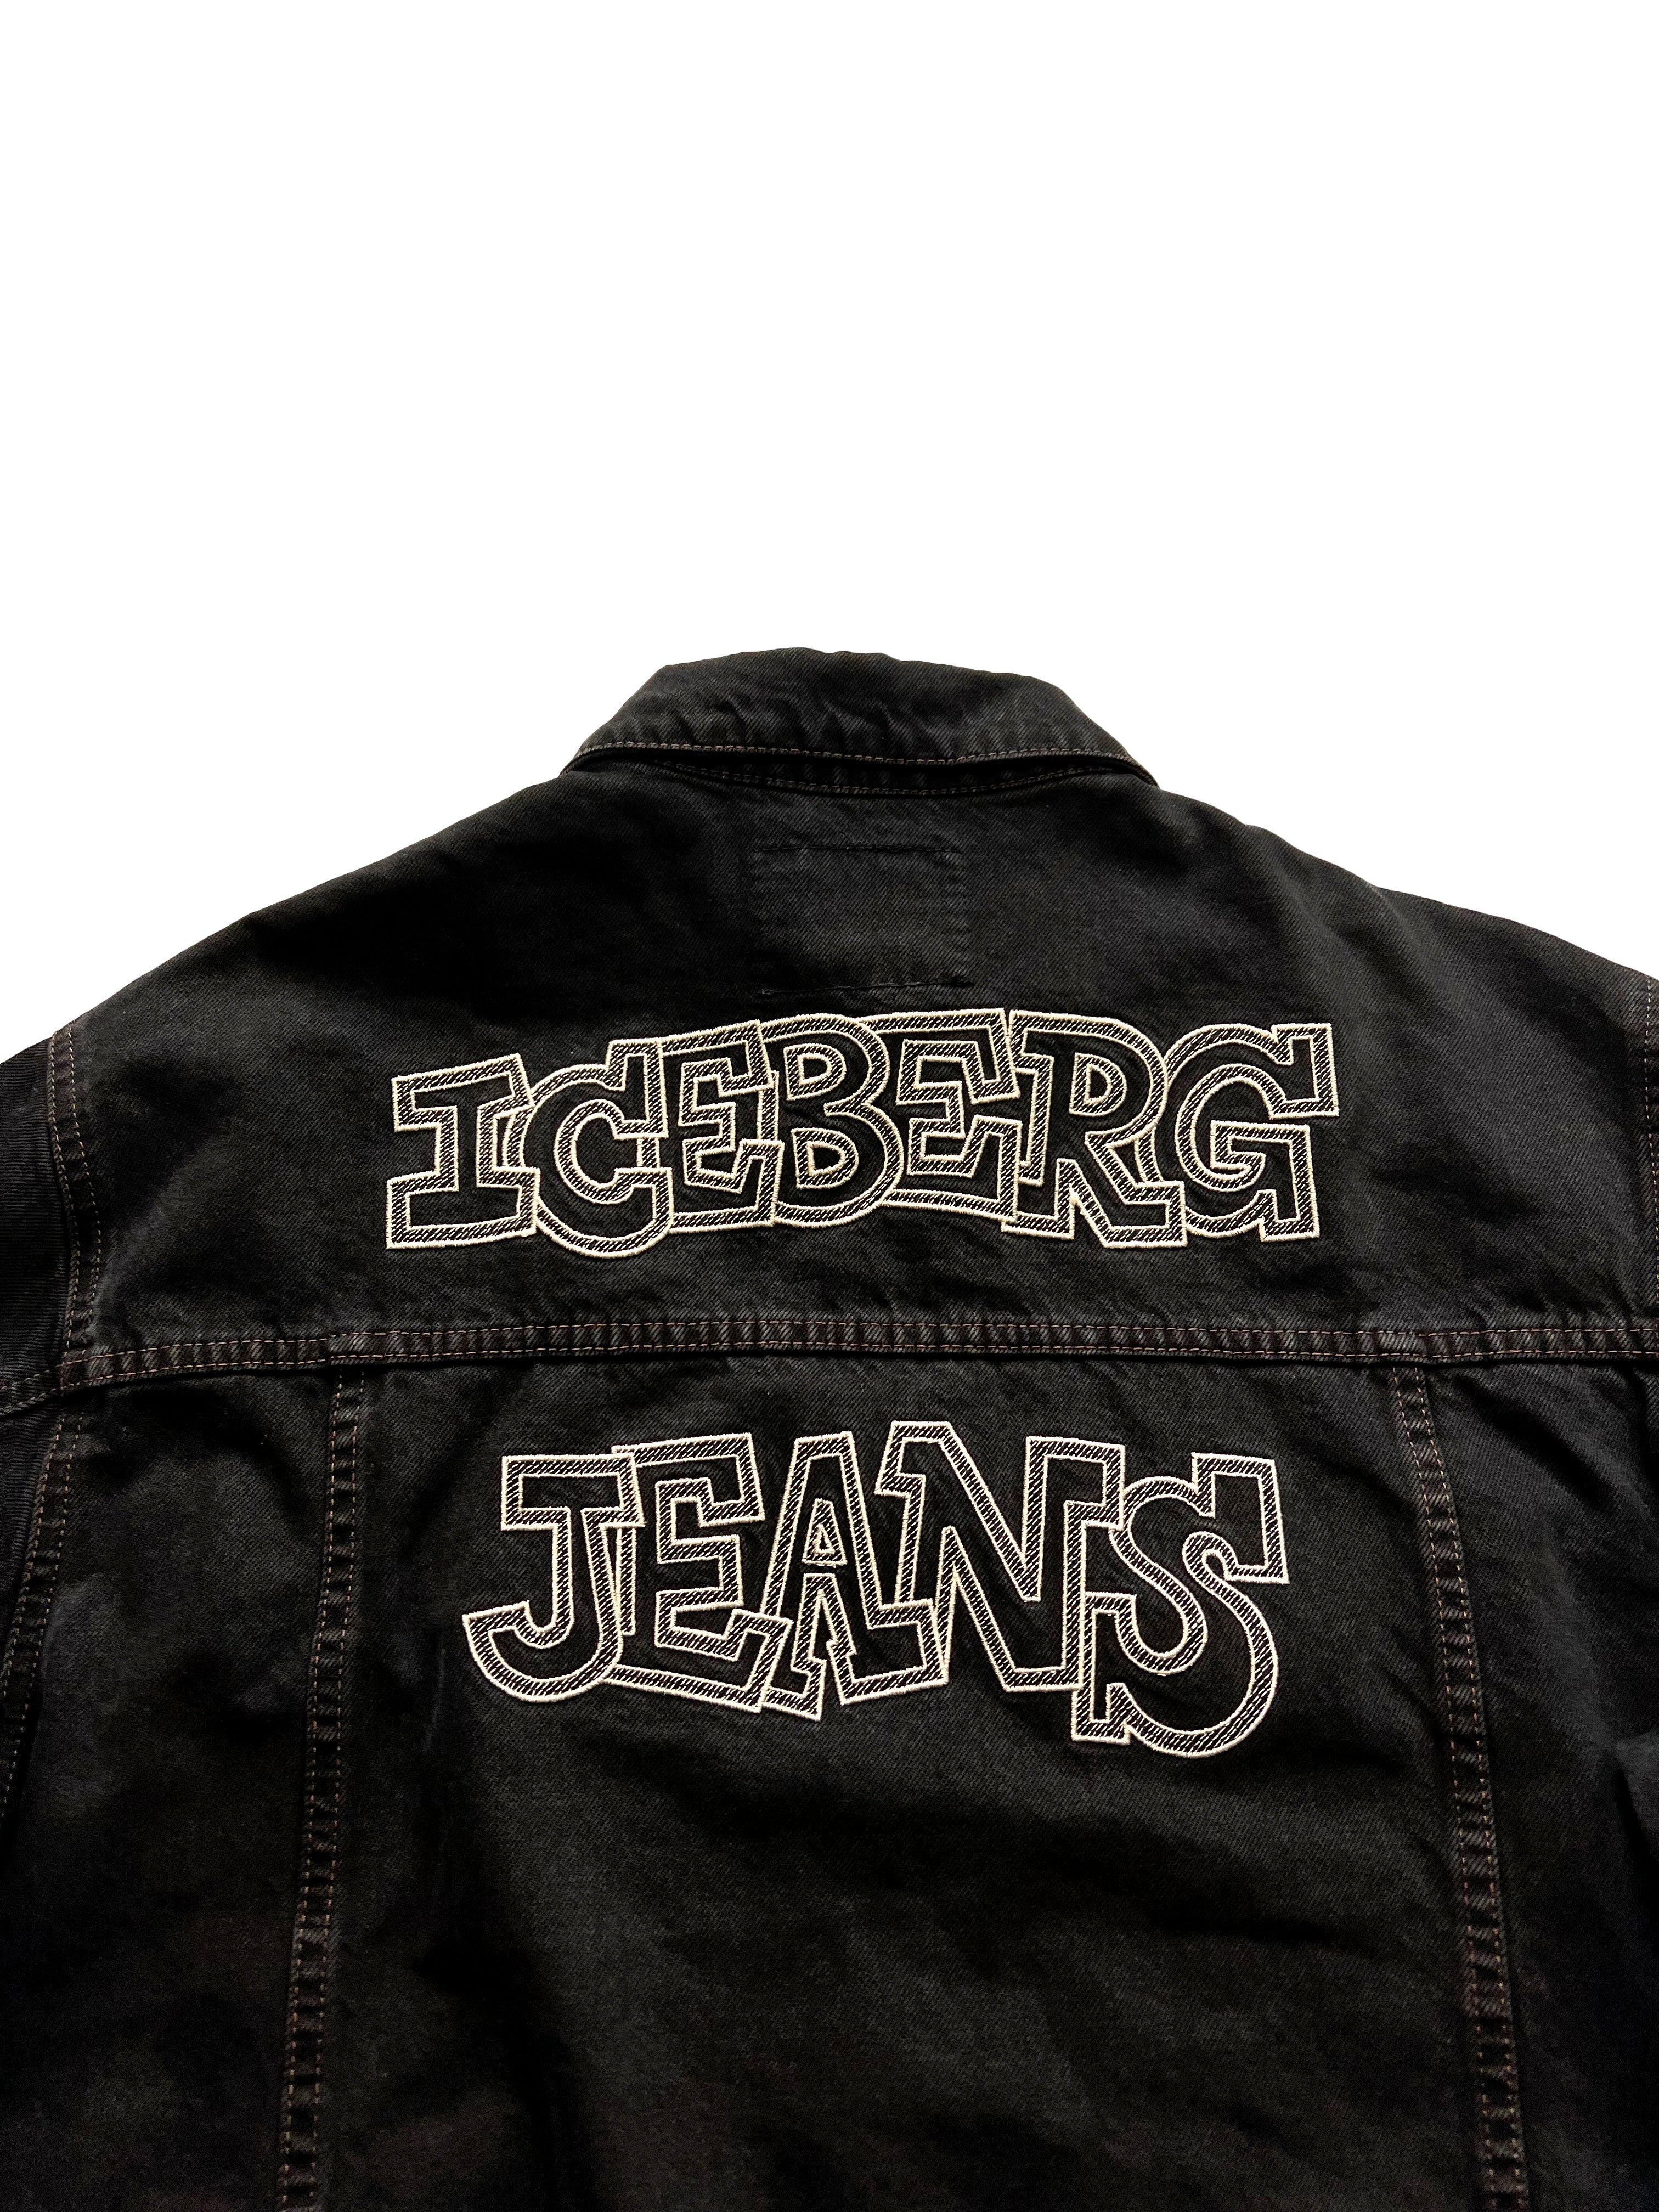 Iceberg Jeans Black Denim Jacket 90's